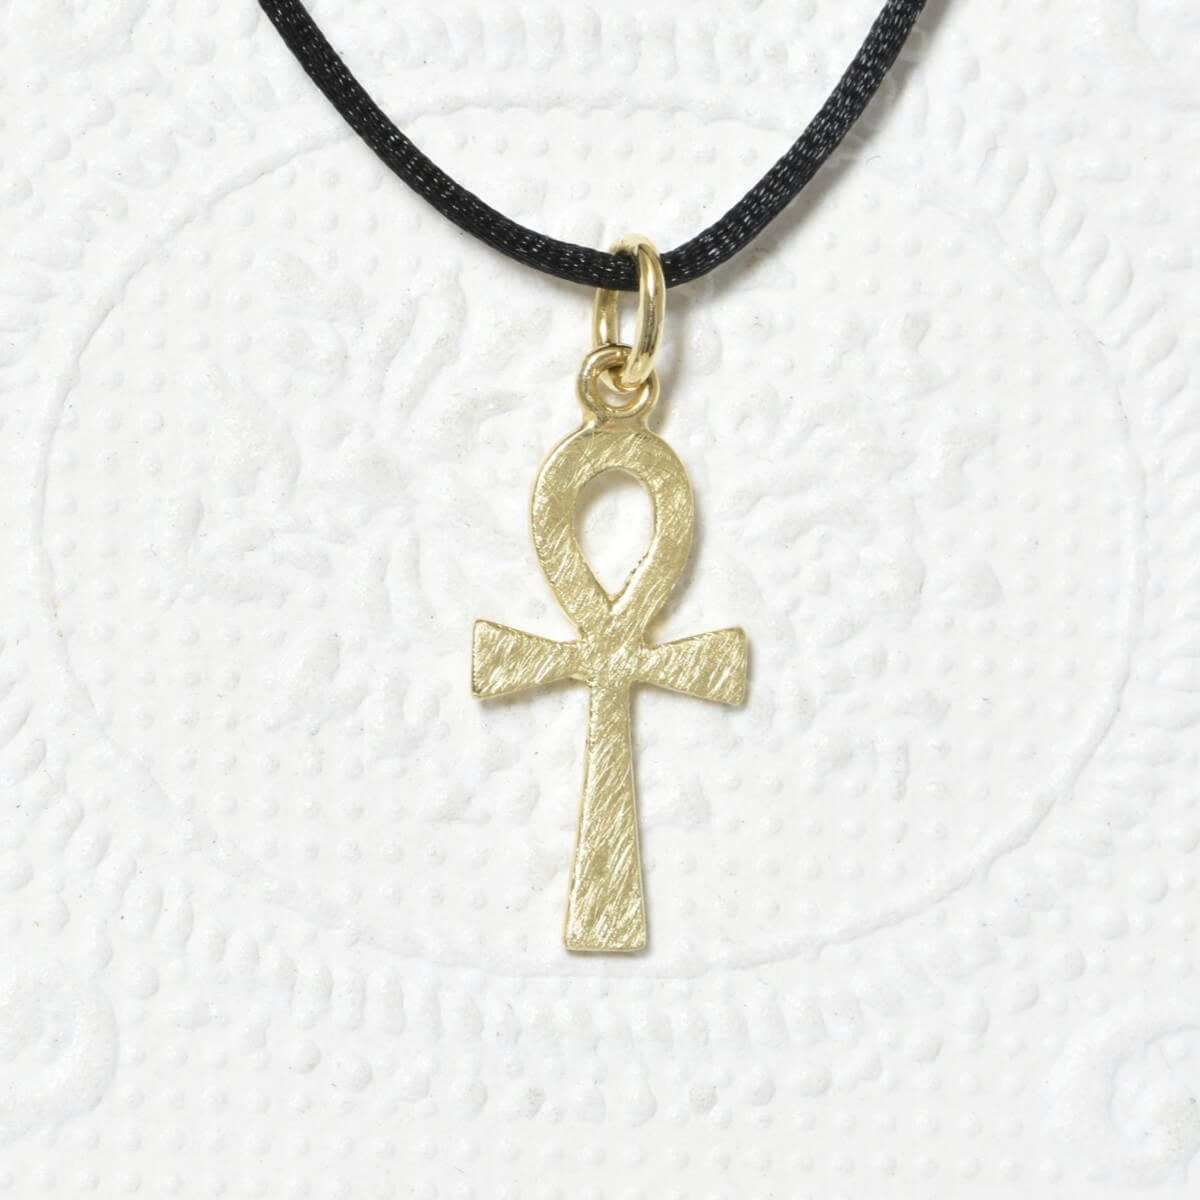 Amun Re Kreuz, Religiöser Schmuck Gold, Kreuzkette